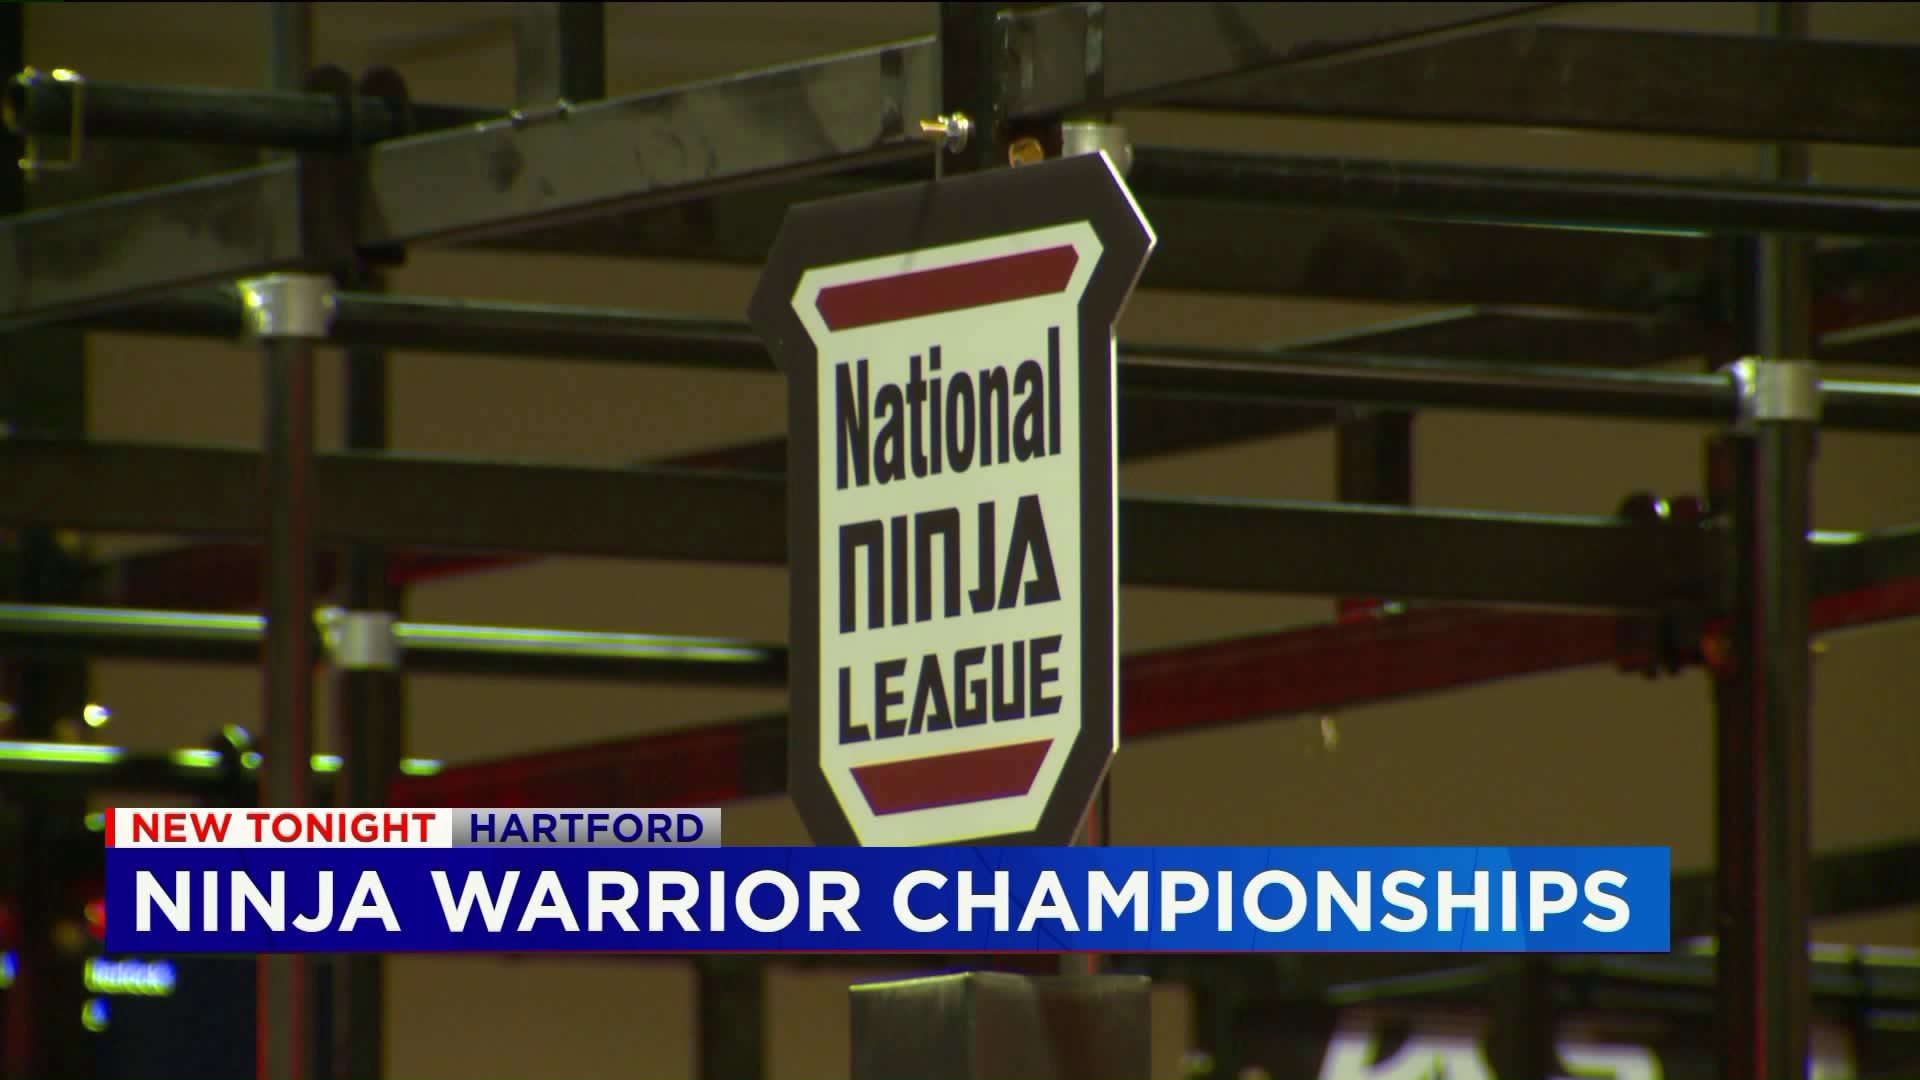 National Ninja League World Championships happening at the XL Center